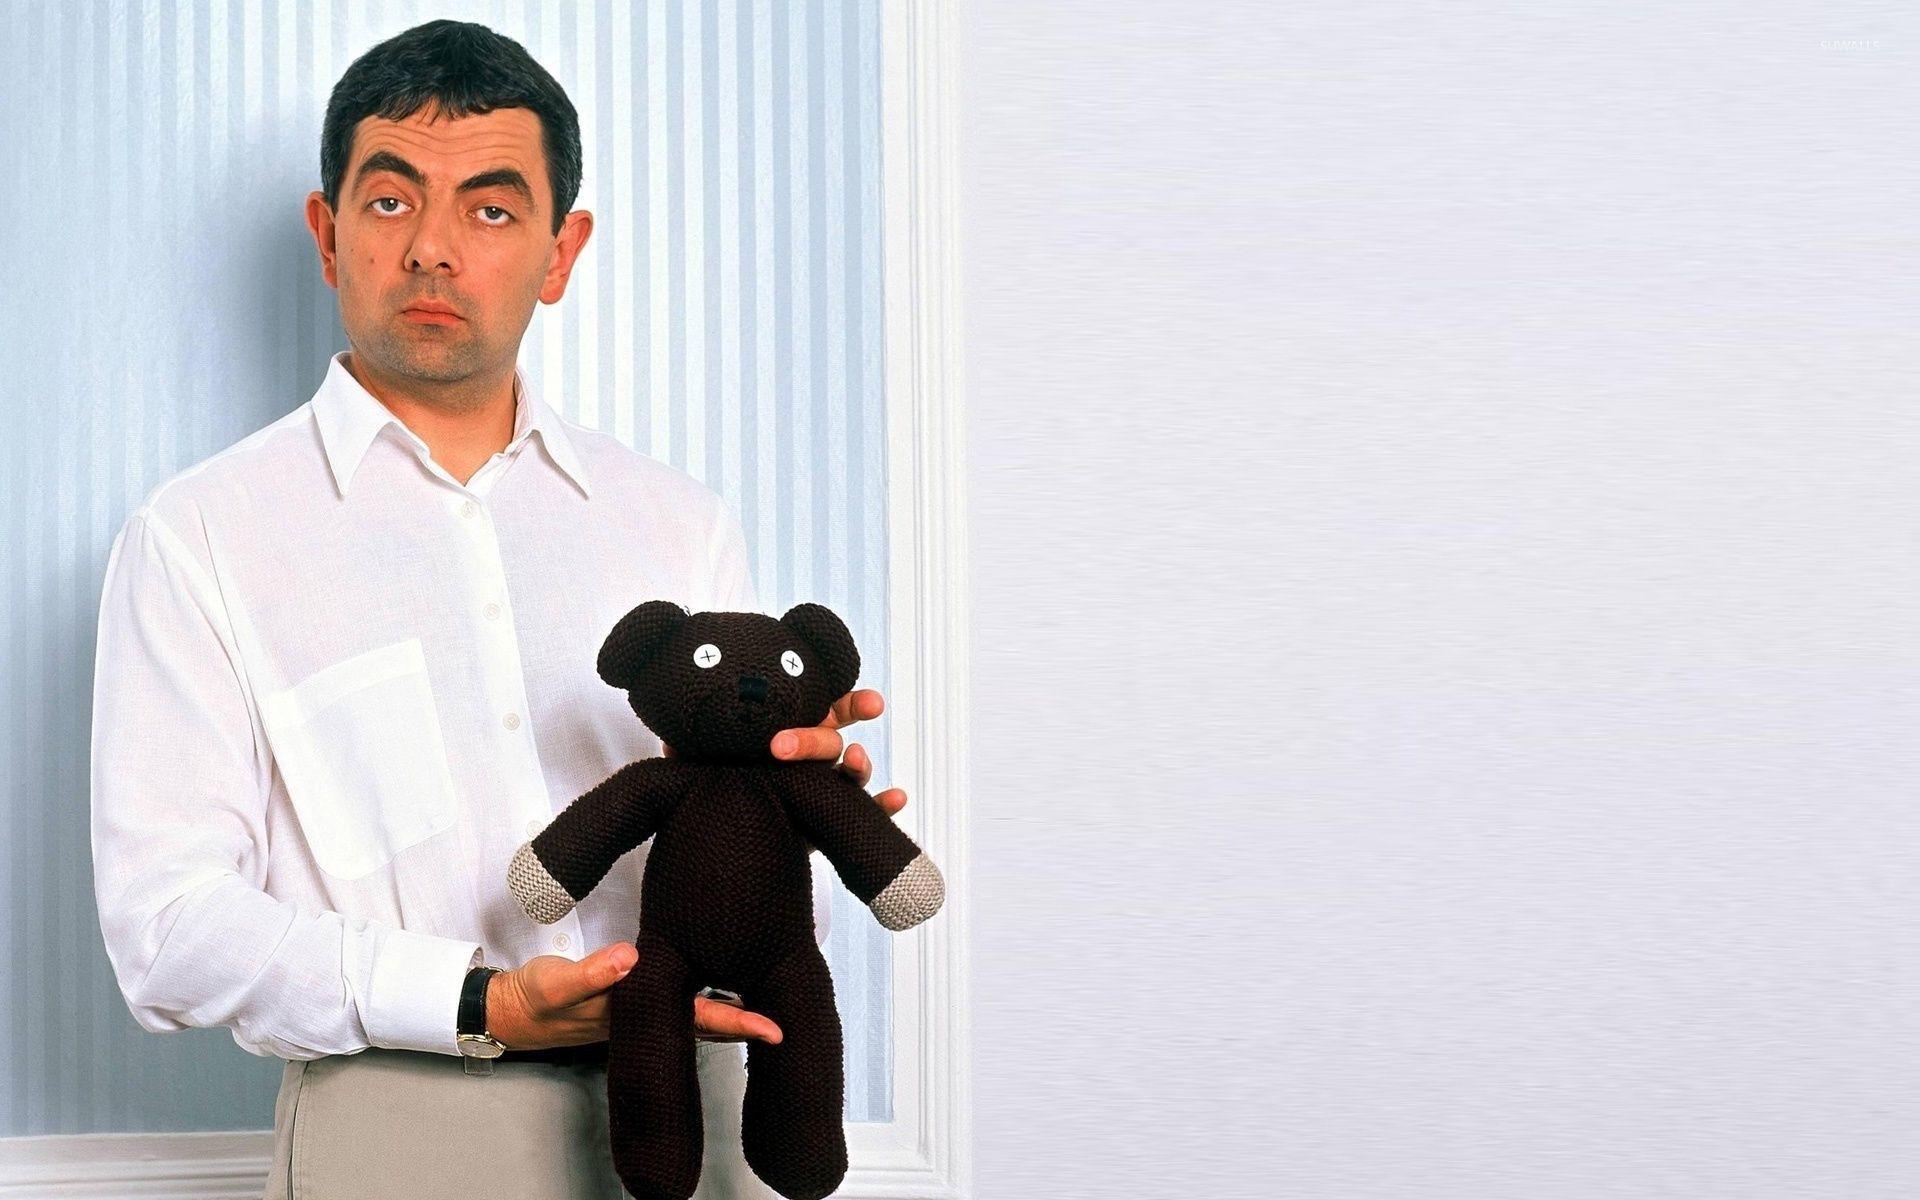 Mr. Bean with his teddy bear wallpaper Show wallpaper